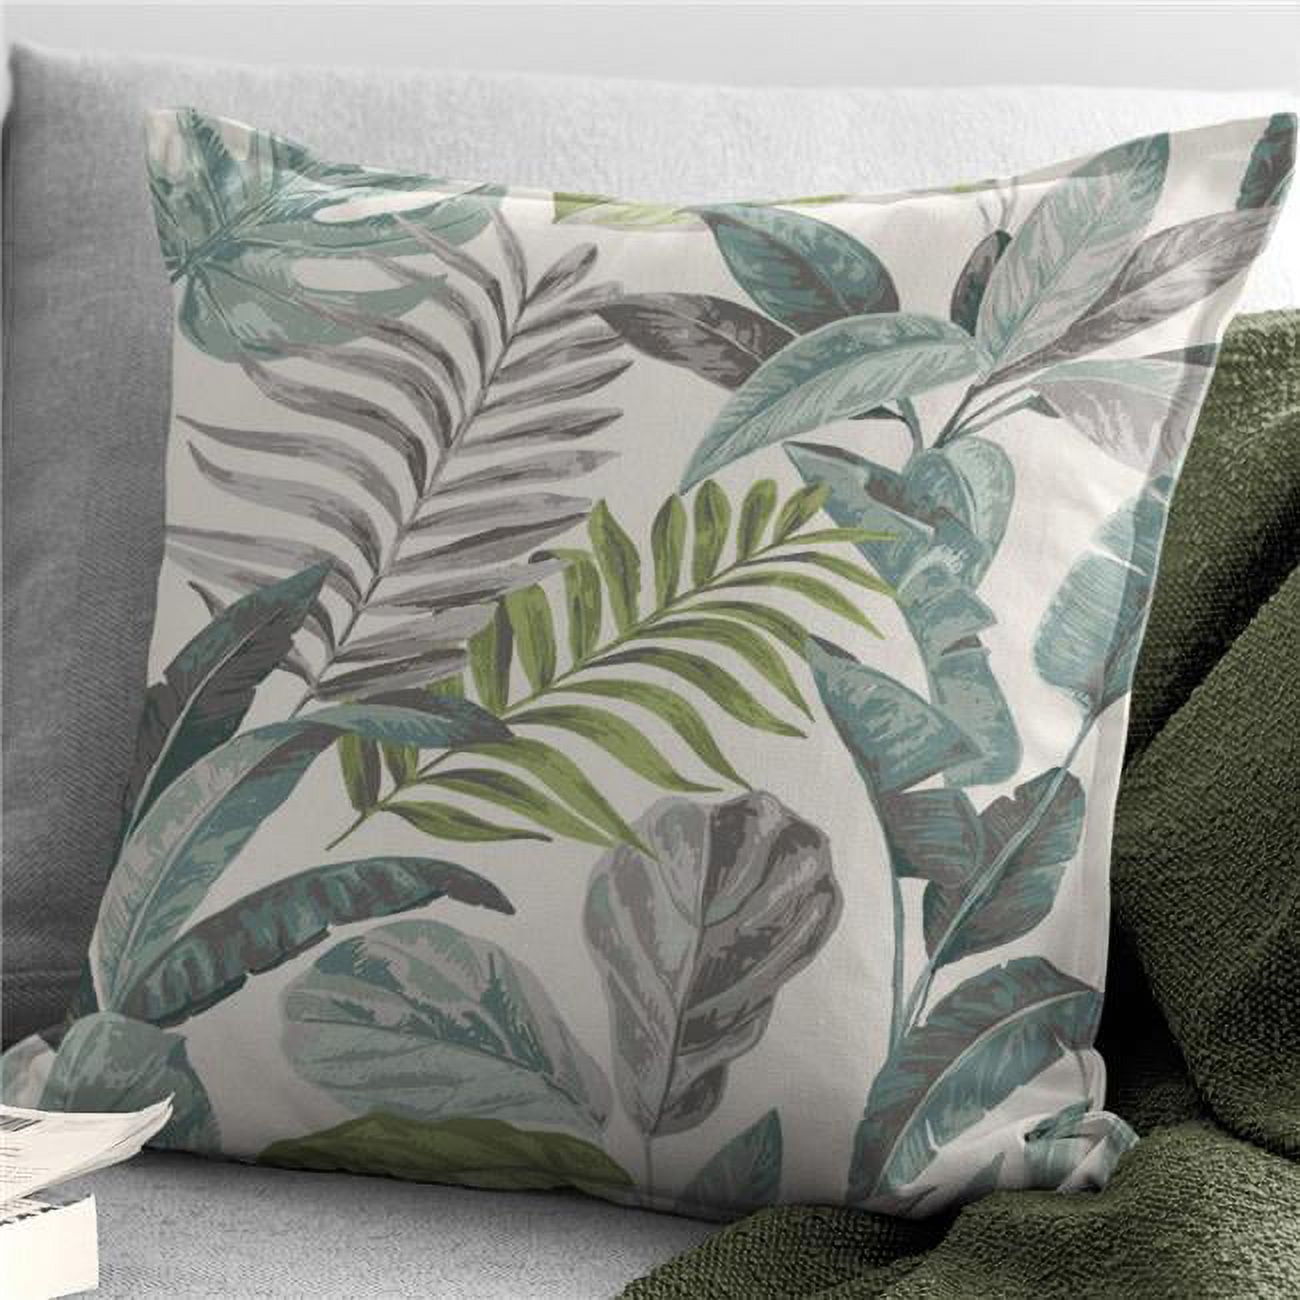 14 x 20 in. Palm Bay Decorative Throw Pillows, Seafoam -  Muebles, MU2832014